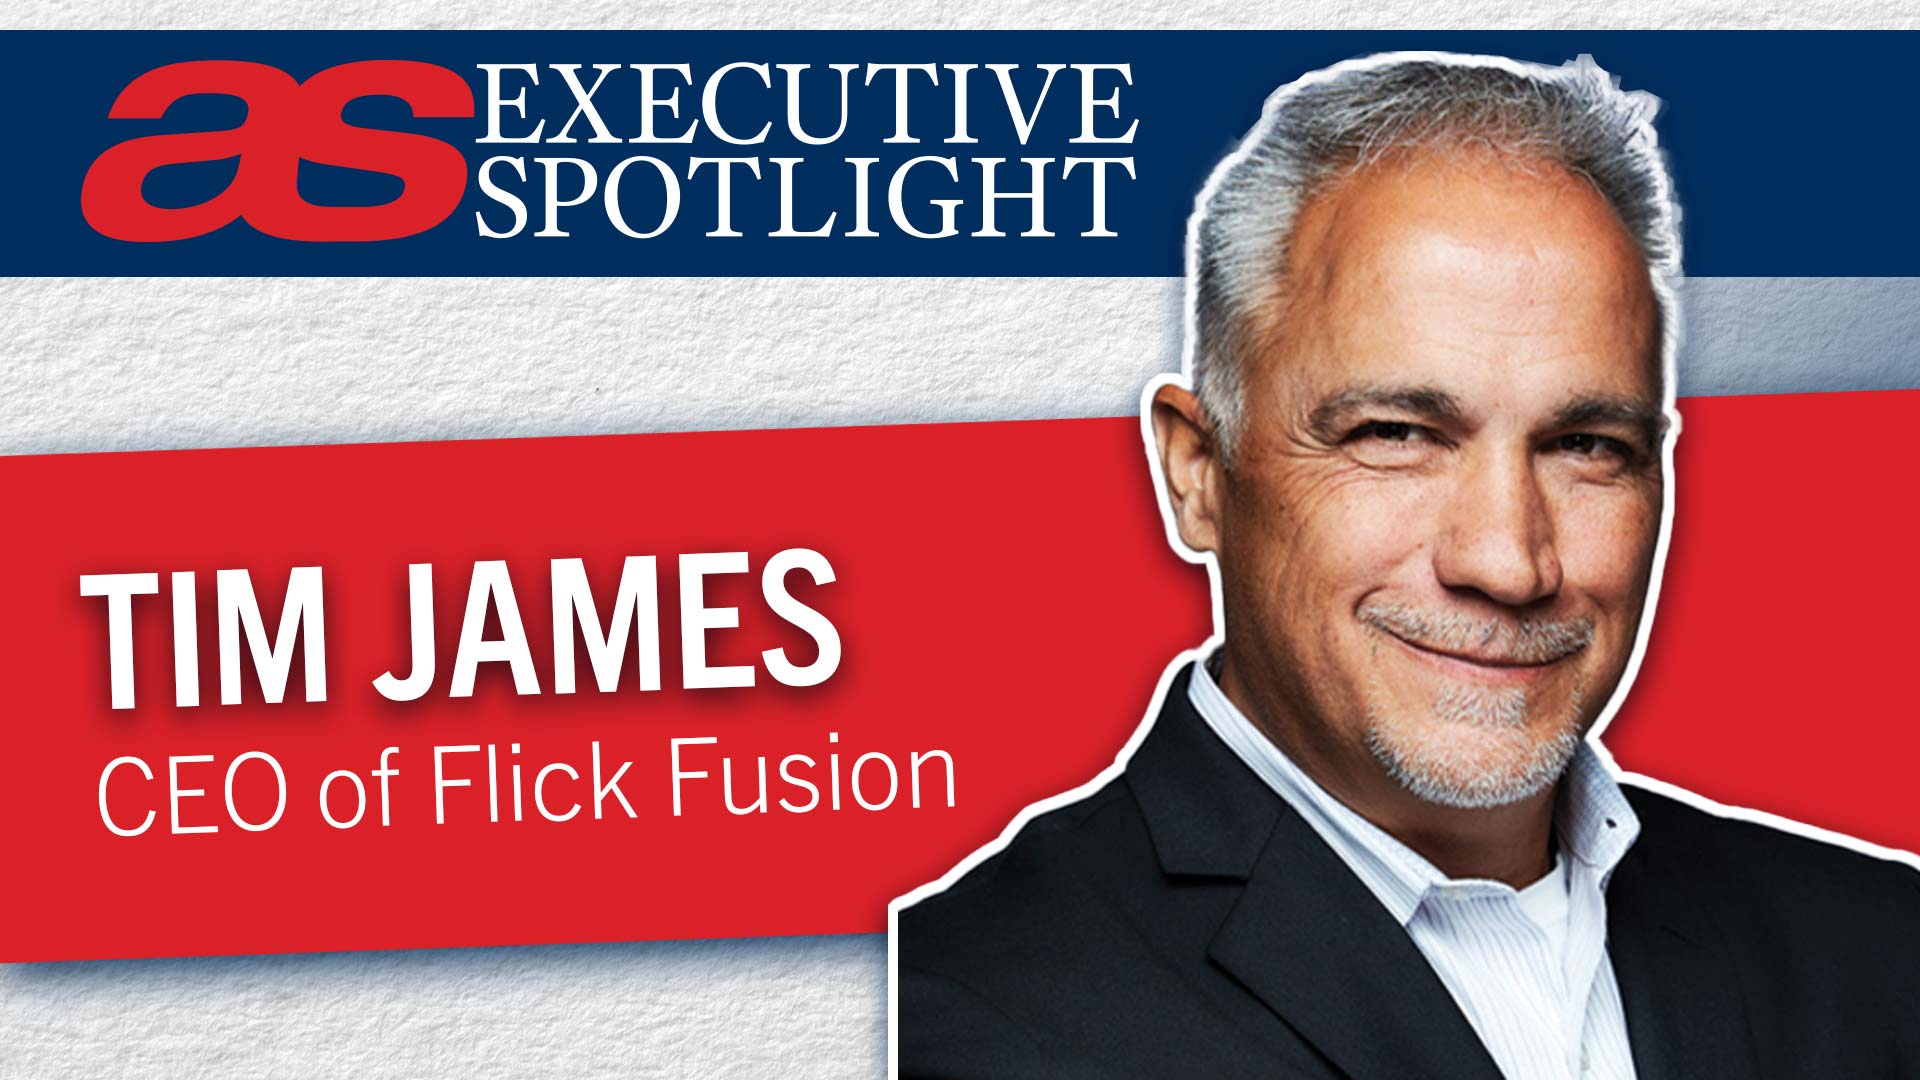 Tim James of Flick Fusion